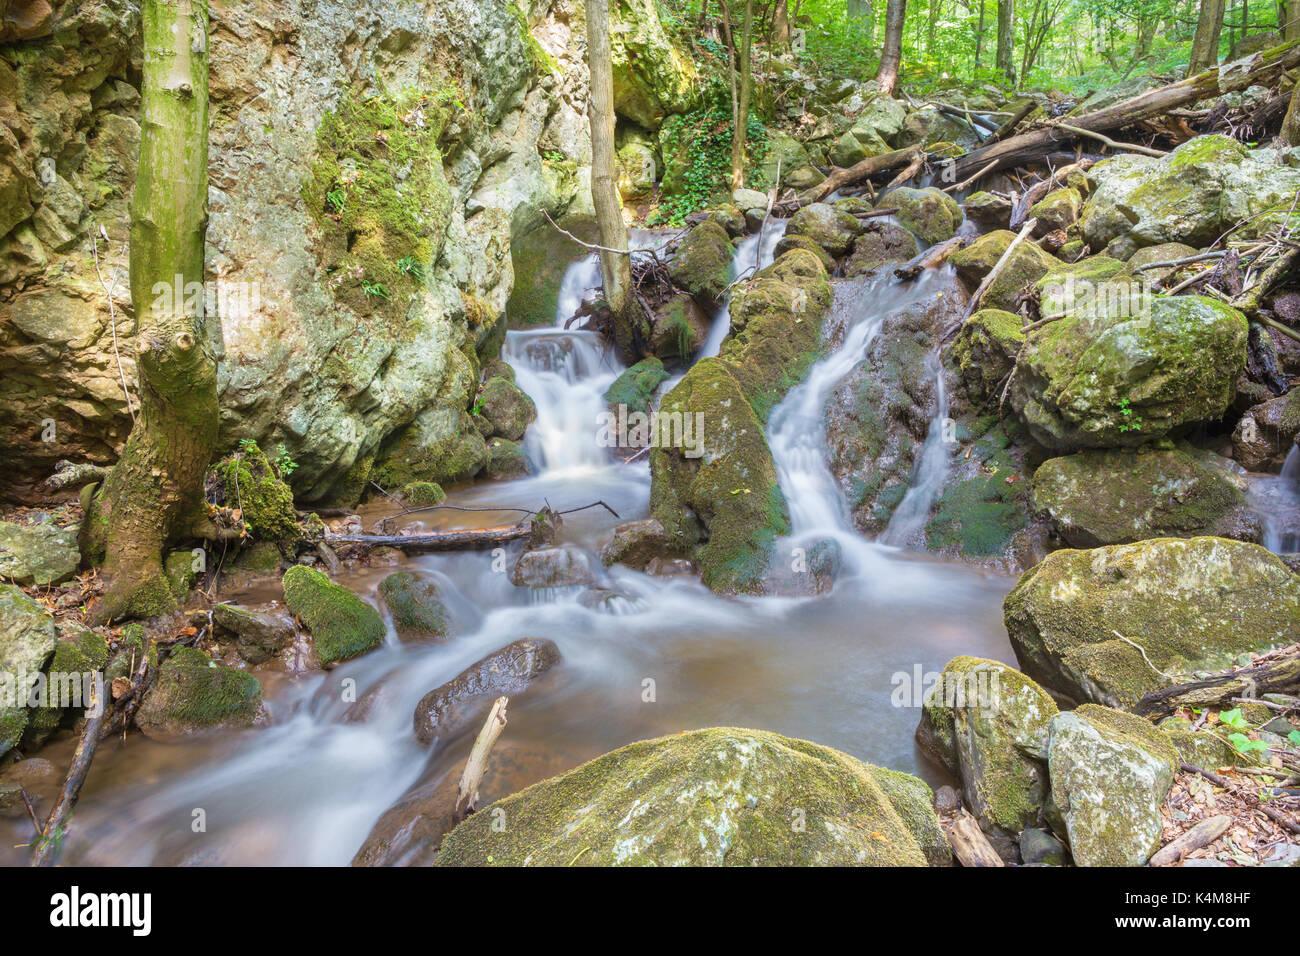 Slovakia - The waterfall in Zadielska valley in national park Slovensky Kras. Stock Photo